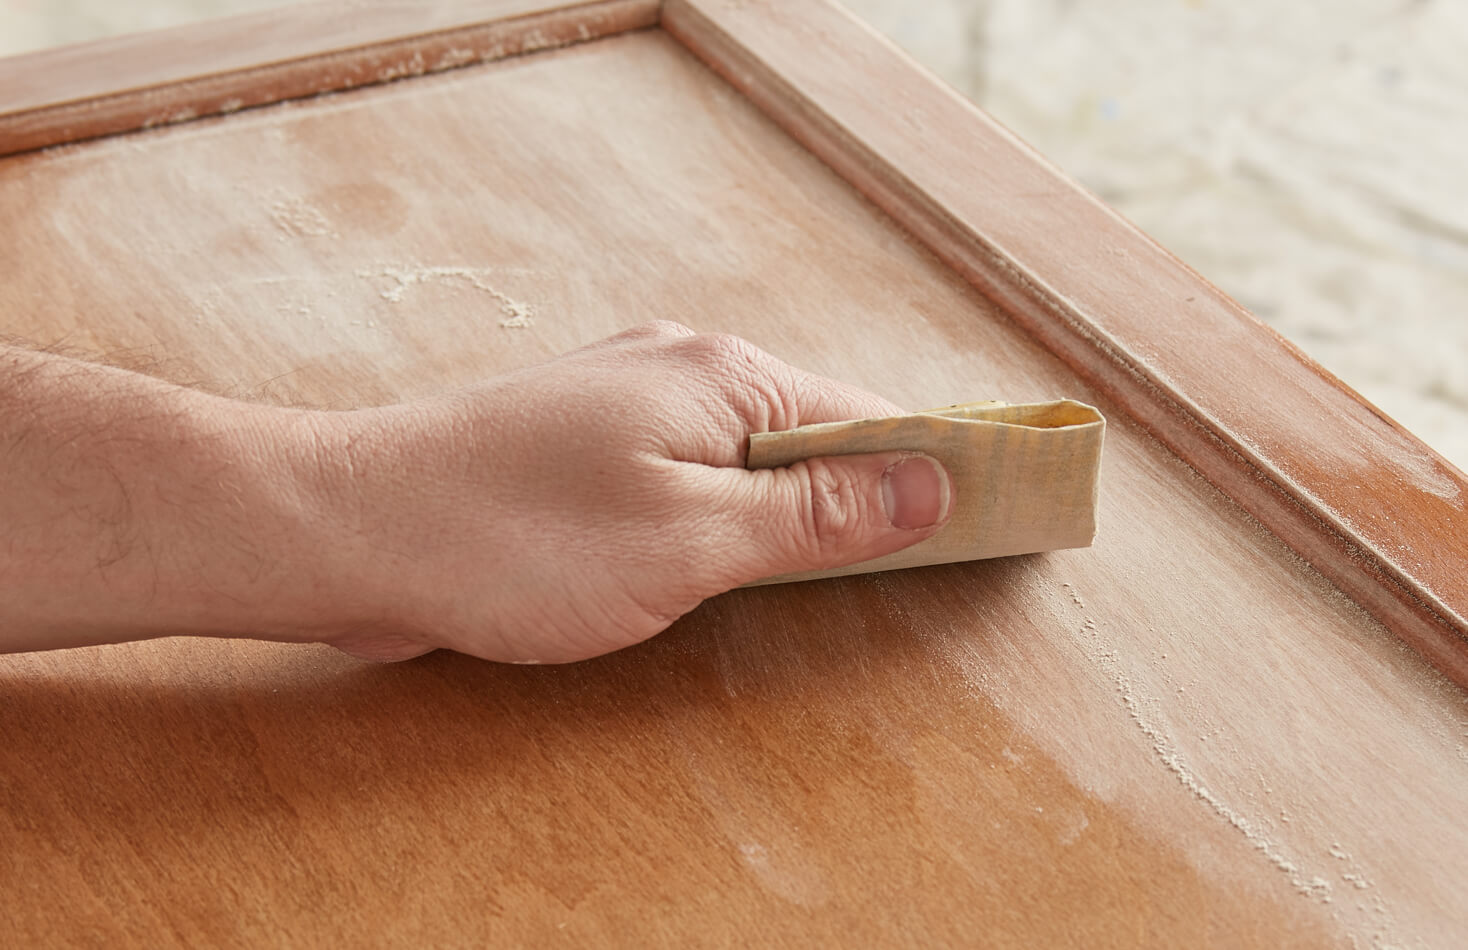 What Grit Sandpaper For Sanding Cabinets